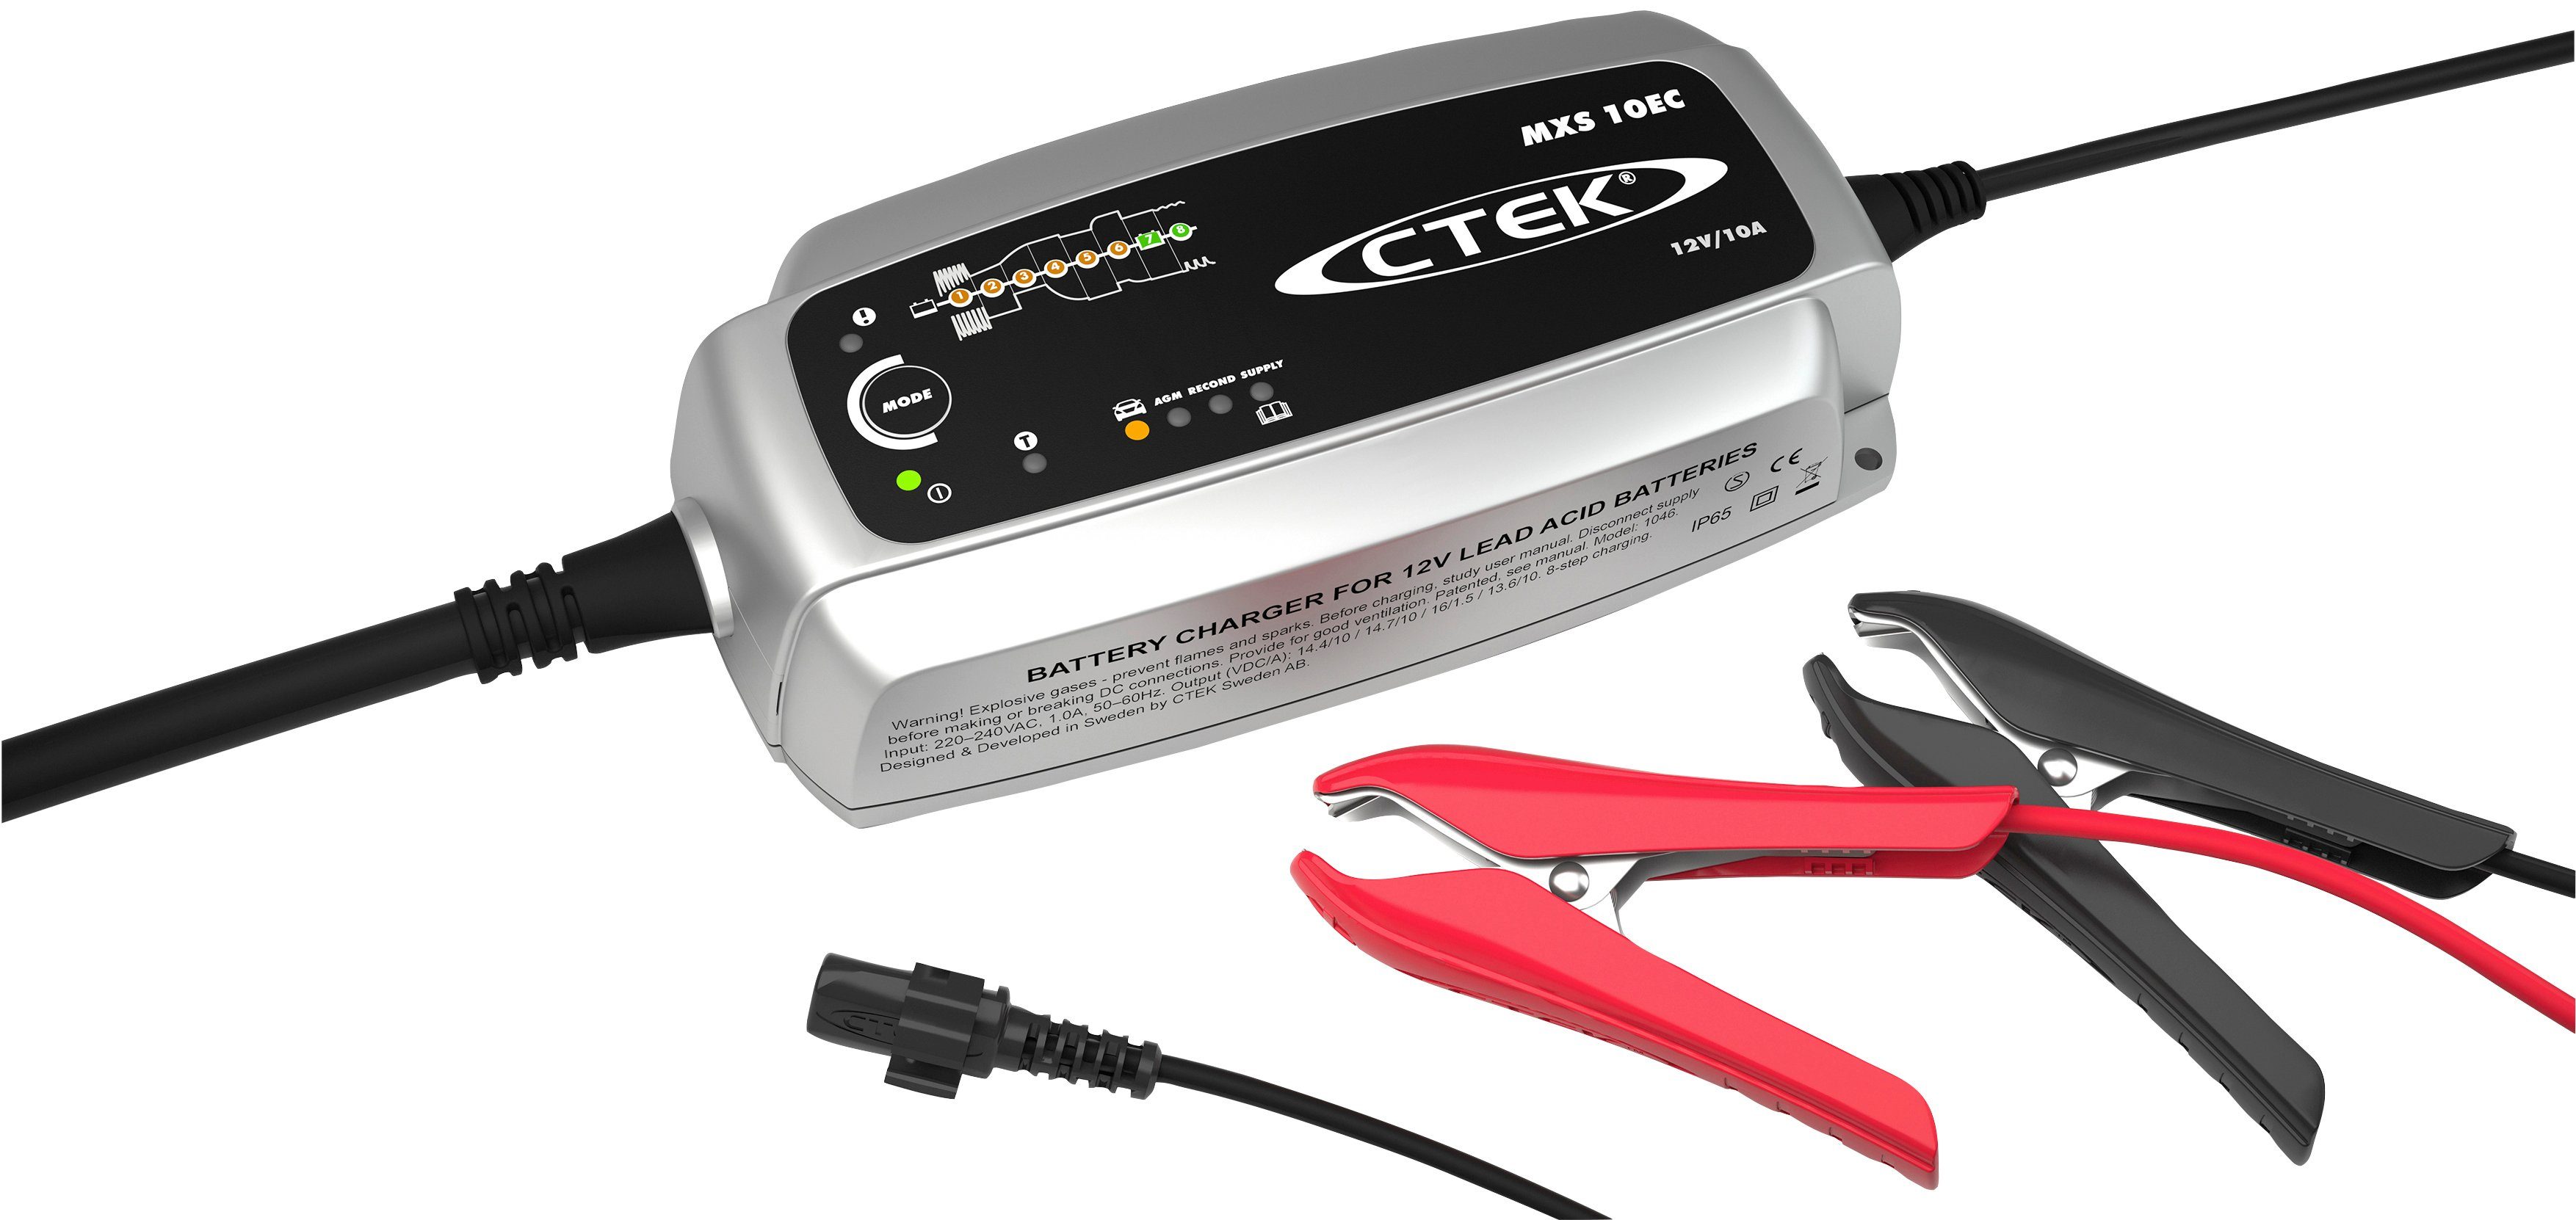 CTEK Ladekabel mit Klemmen und LED Batterie Statusanzeige - CTEK Batterie  Ladege